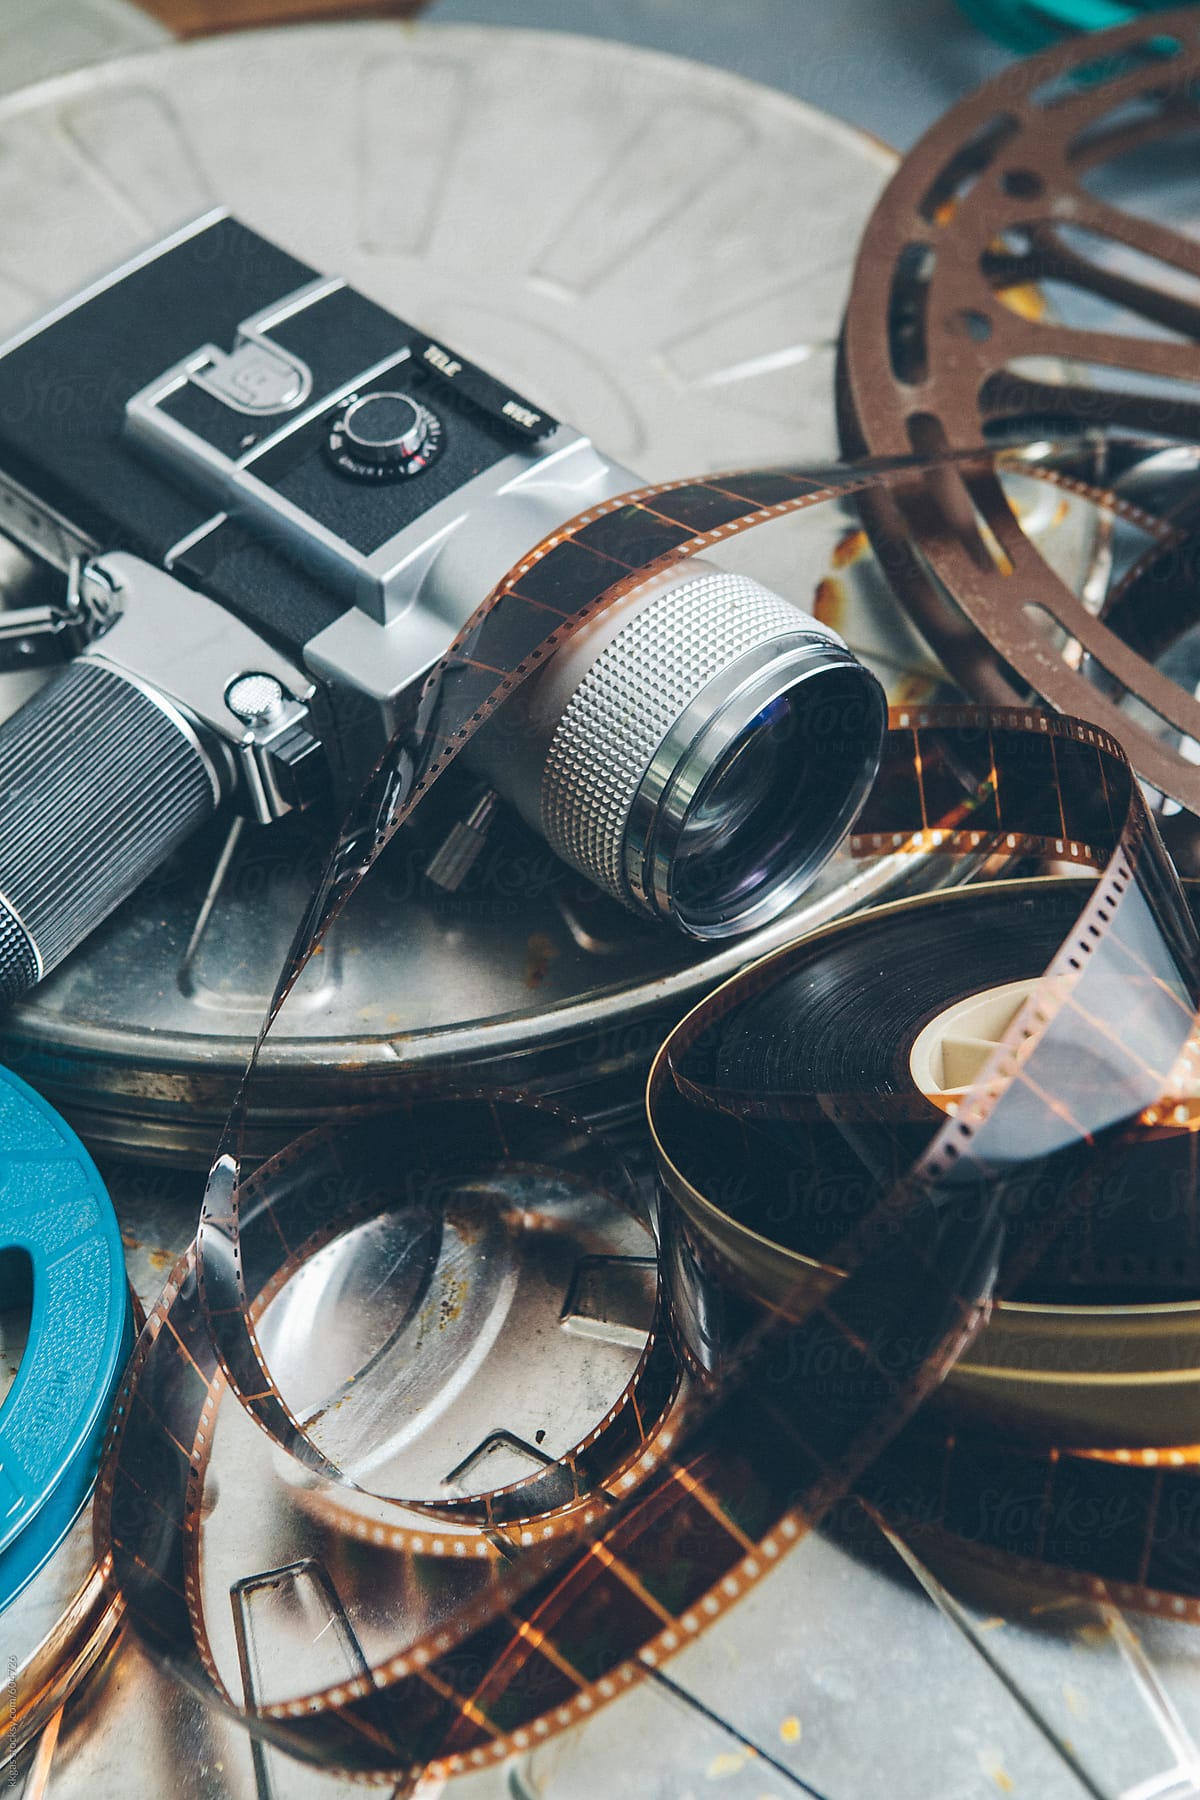 Cinema cameras and reels